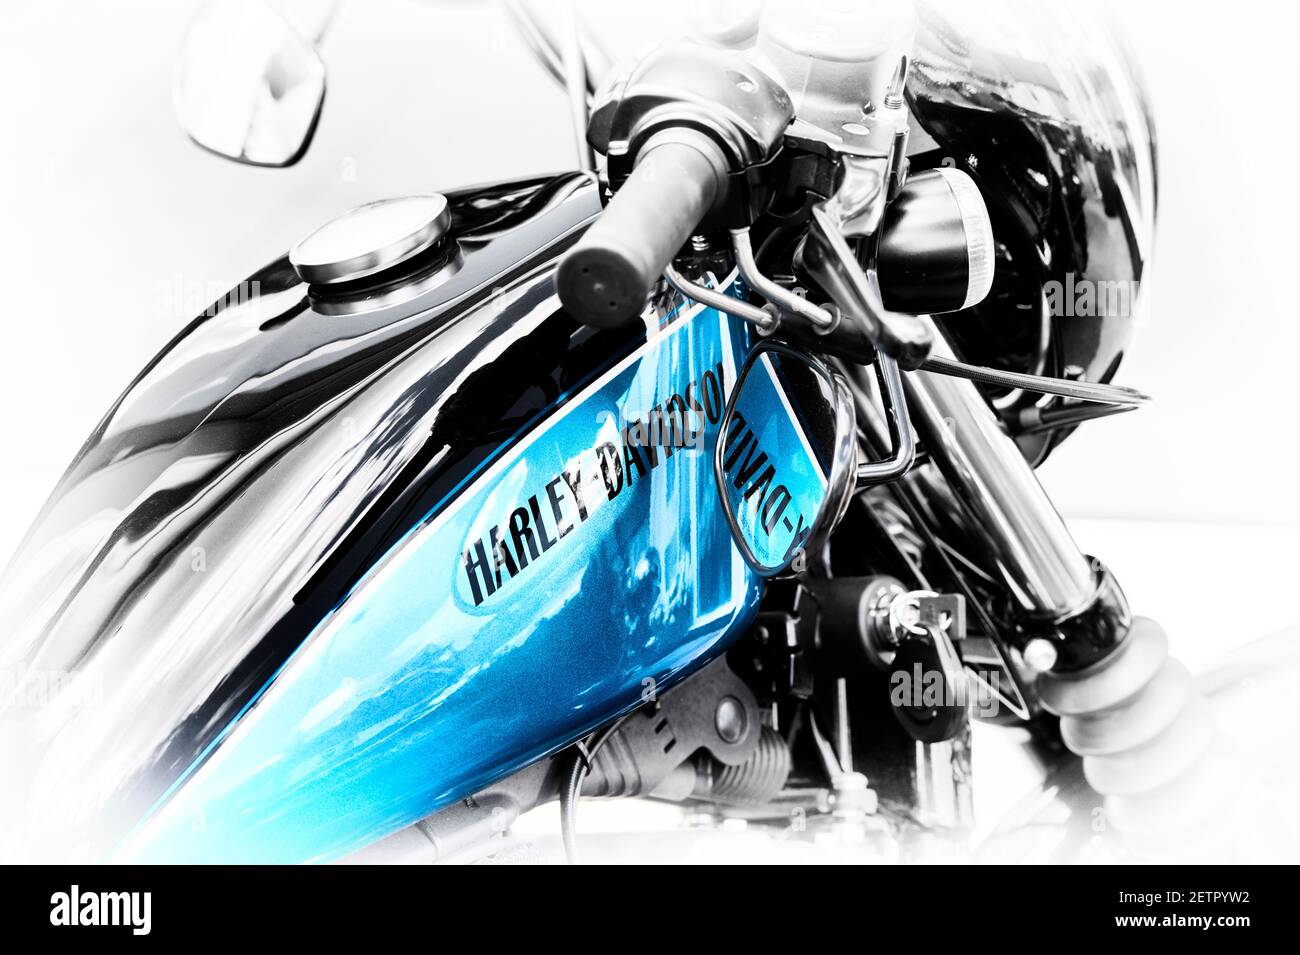 Harley Davidson Sportster Motorcycle Abstract. Bianco e nero dalle tonalità blu Foto Stock